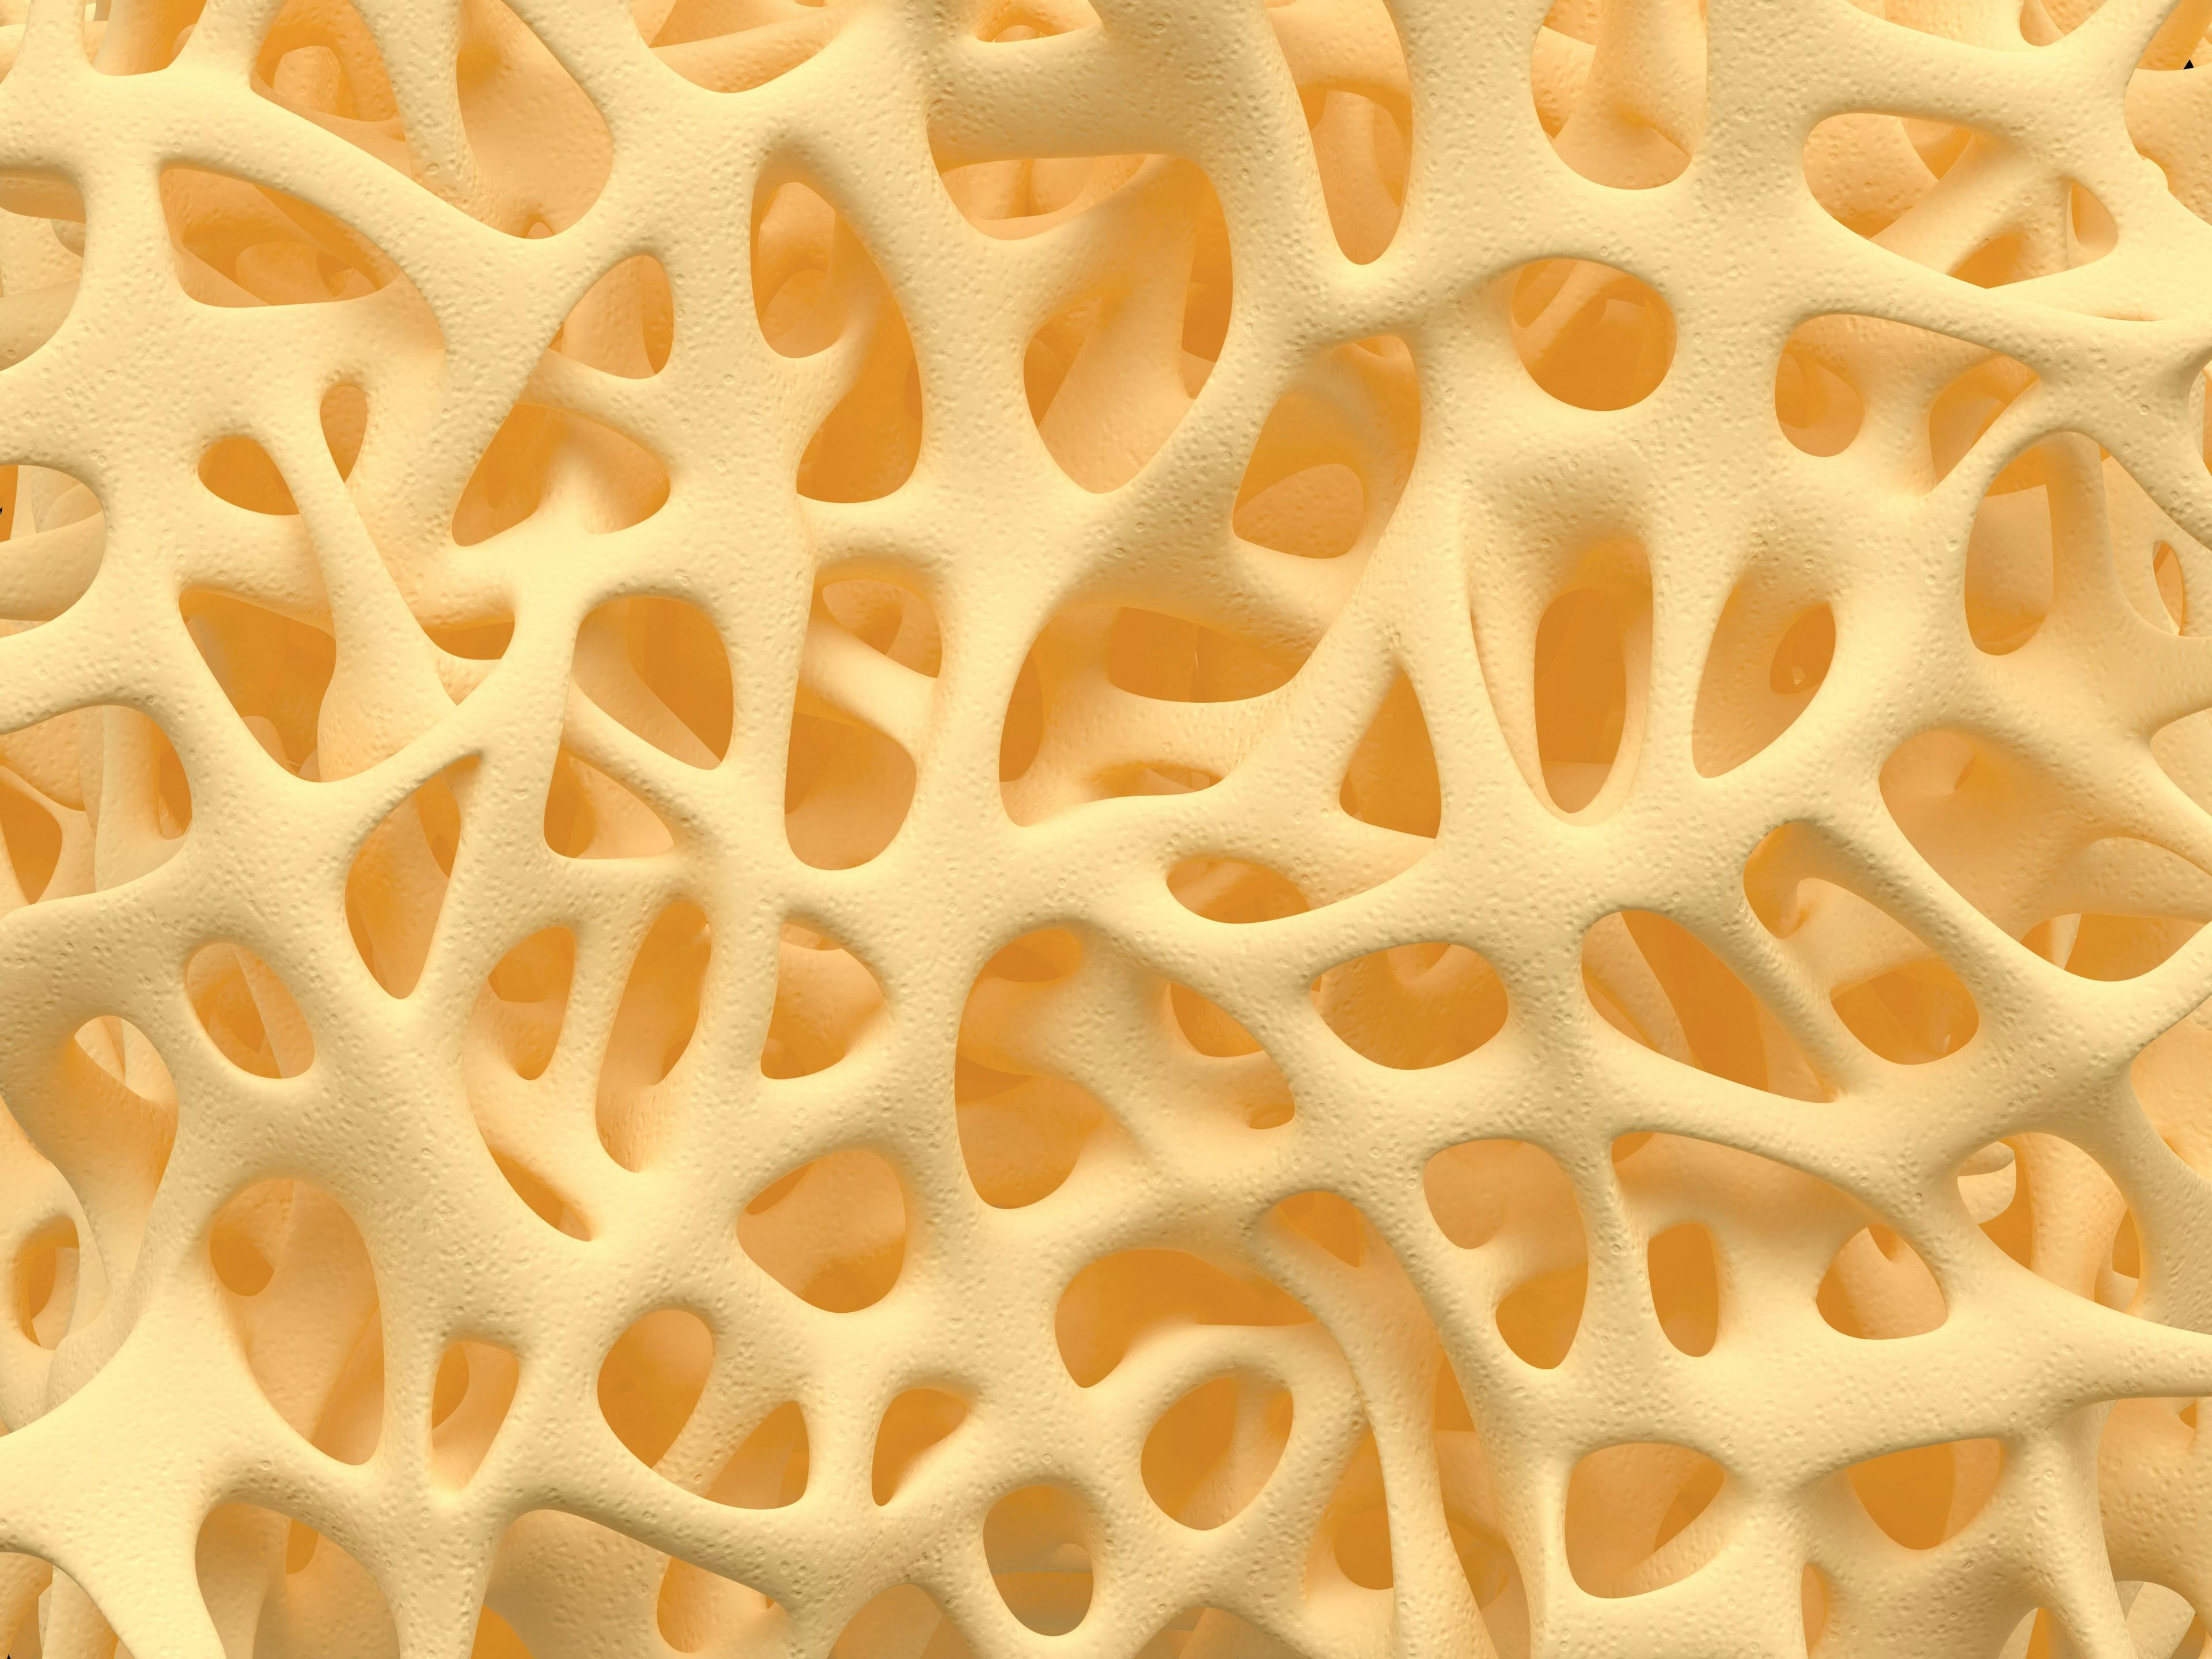 An illustration of porous bone structure